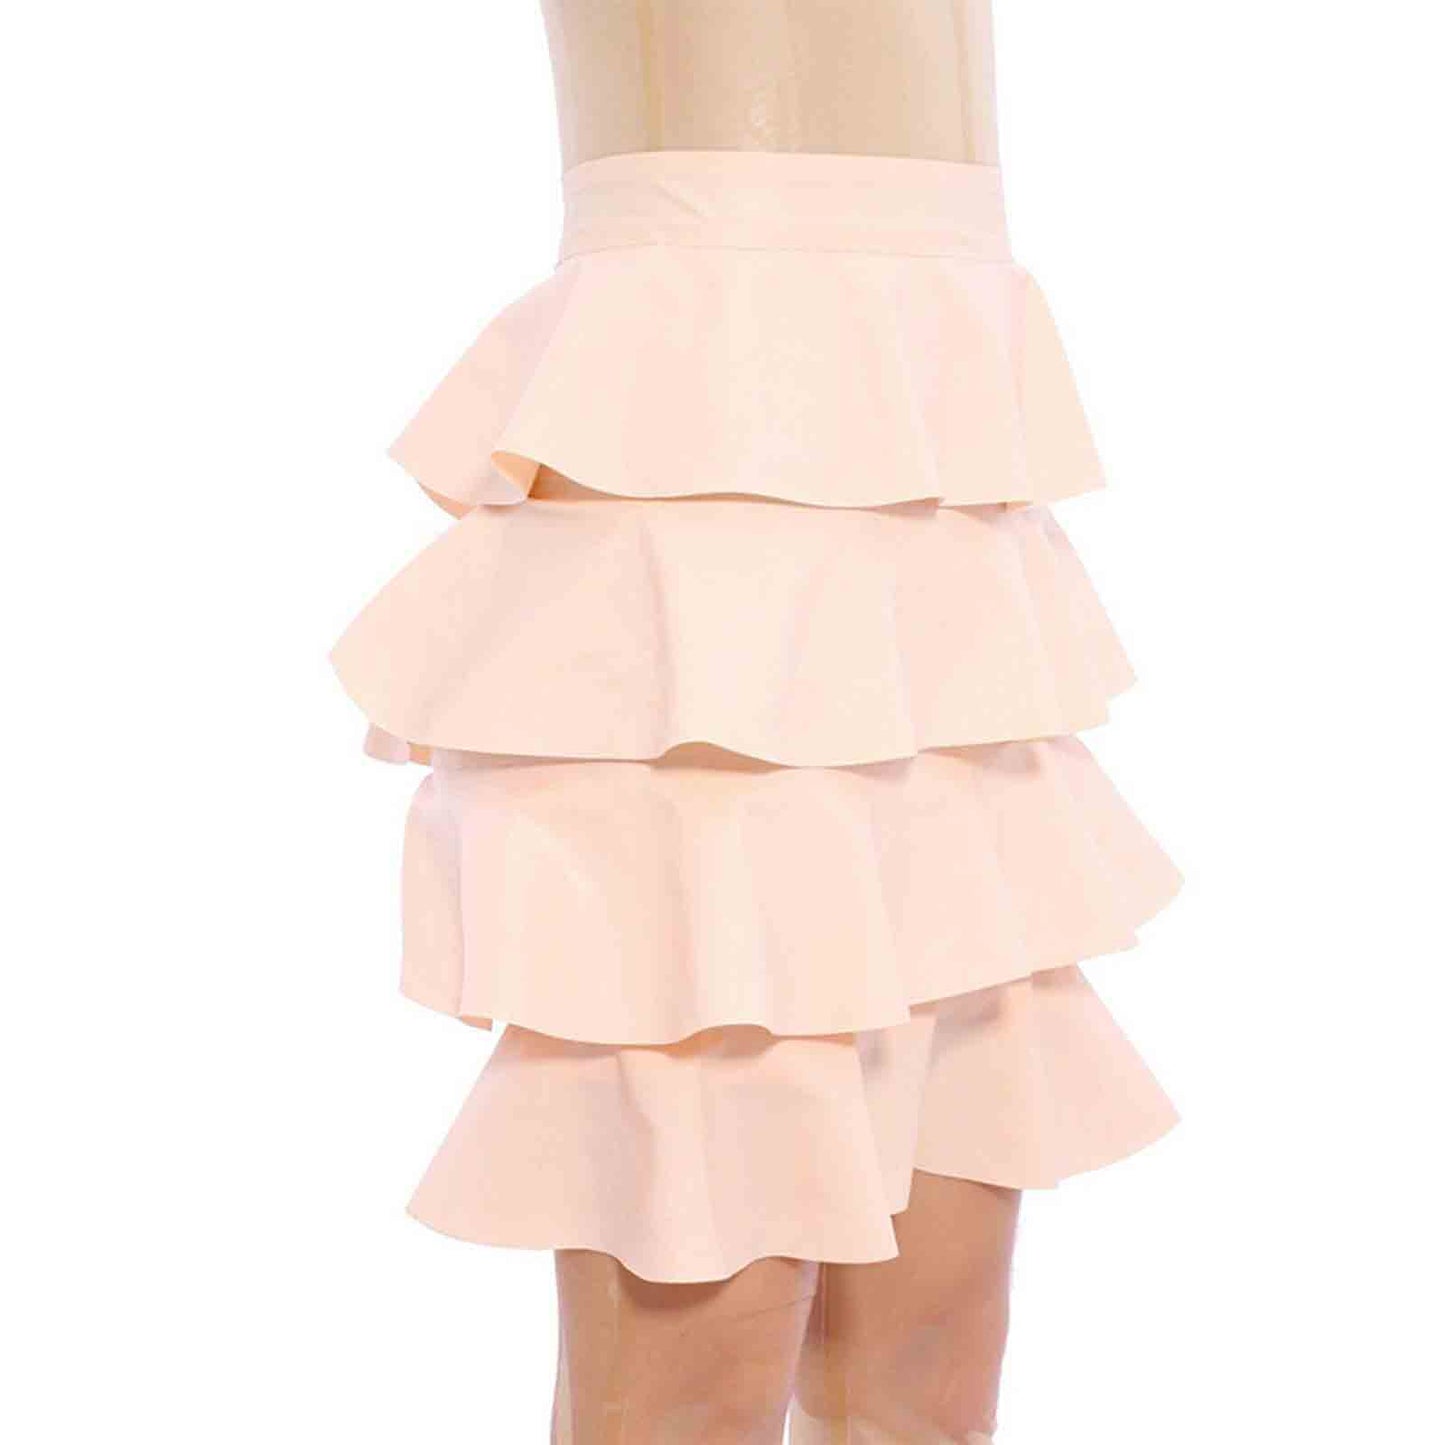 MONNIK Latex ladies Fashion skirt sexy Women's Rubber Midi skirt cake skirt with zip for fetish Catsuit Club wear